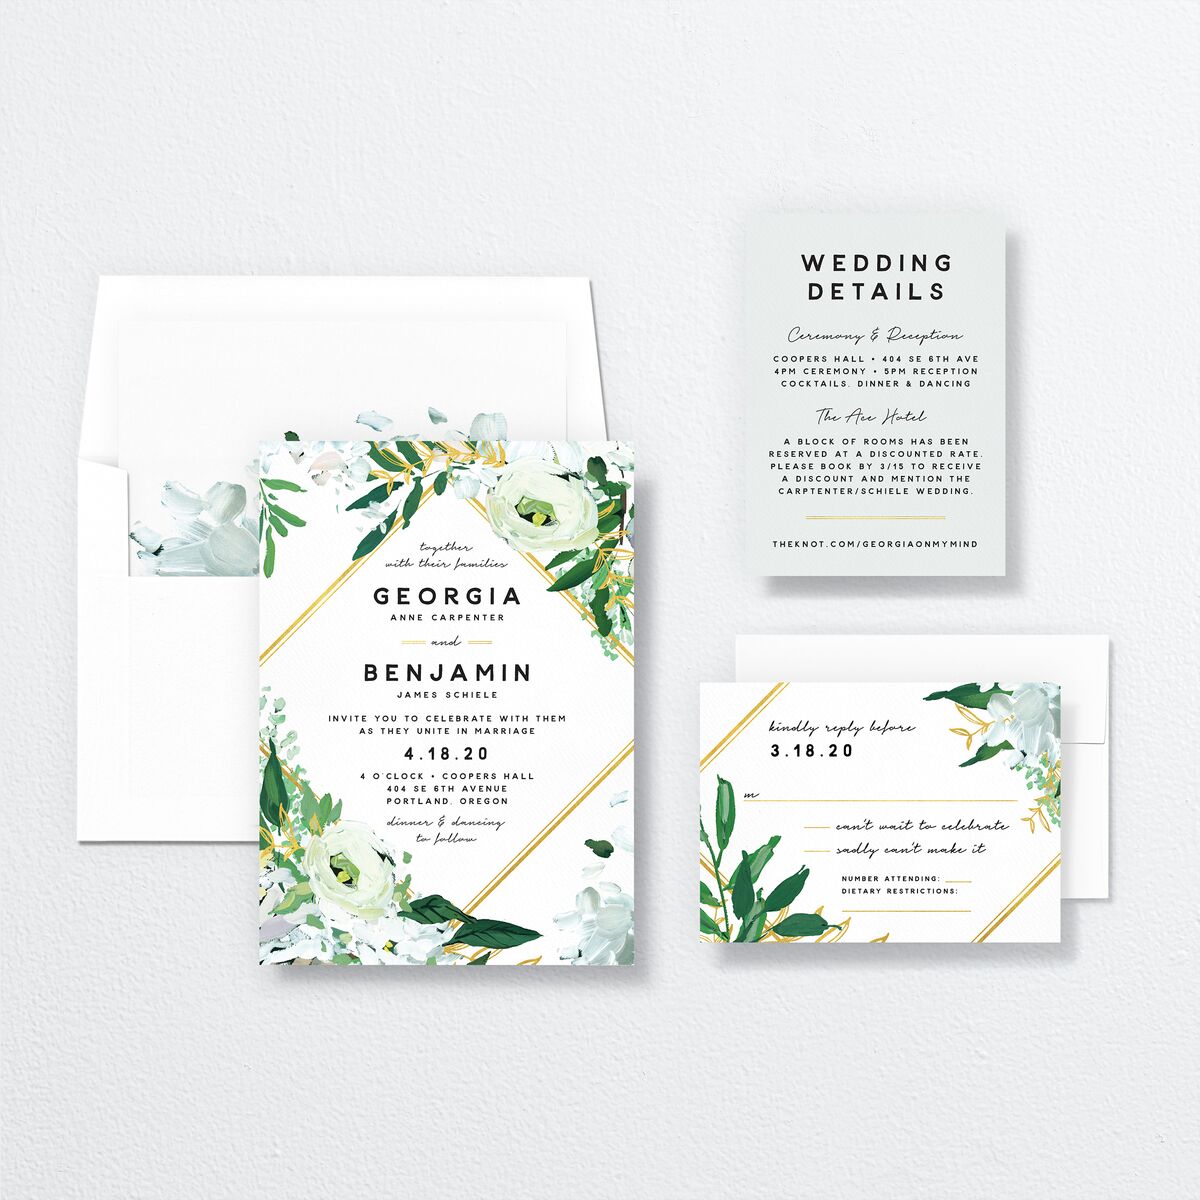 Vibrant Greenery Wedding Invitations suite in Pure White